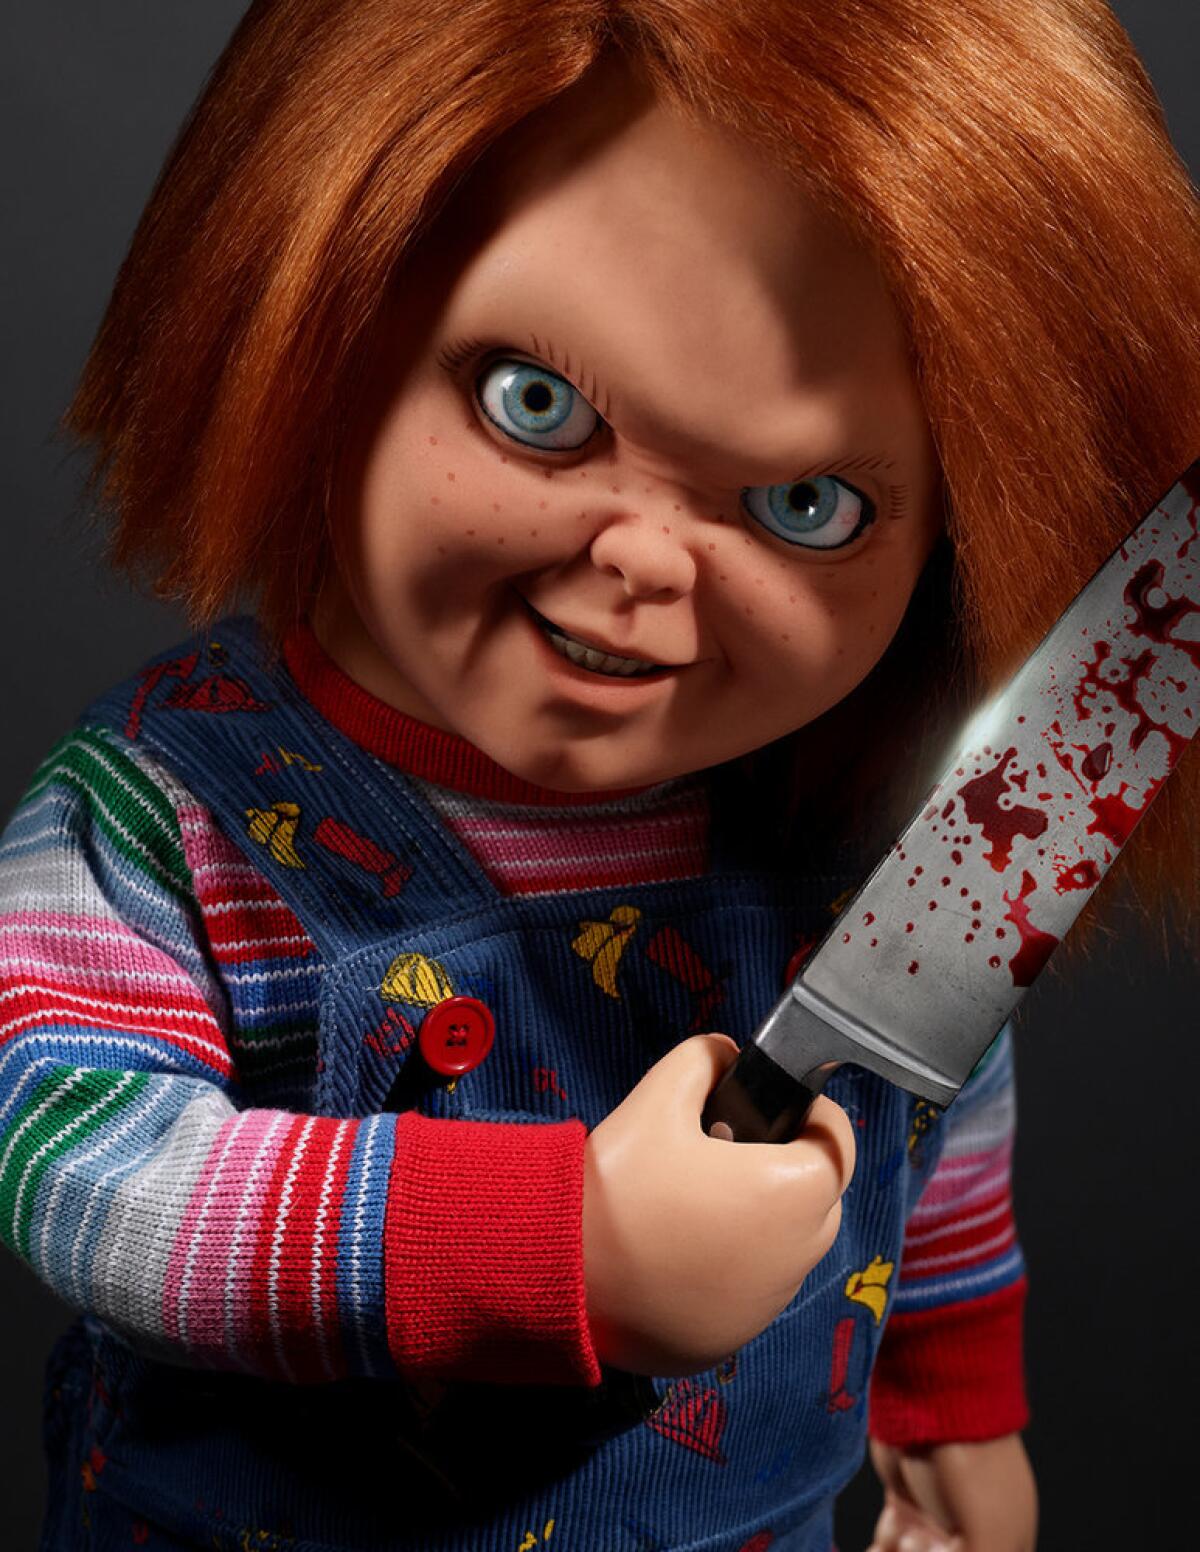 Chucky Doll – Apps no Google Play